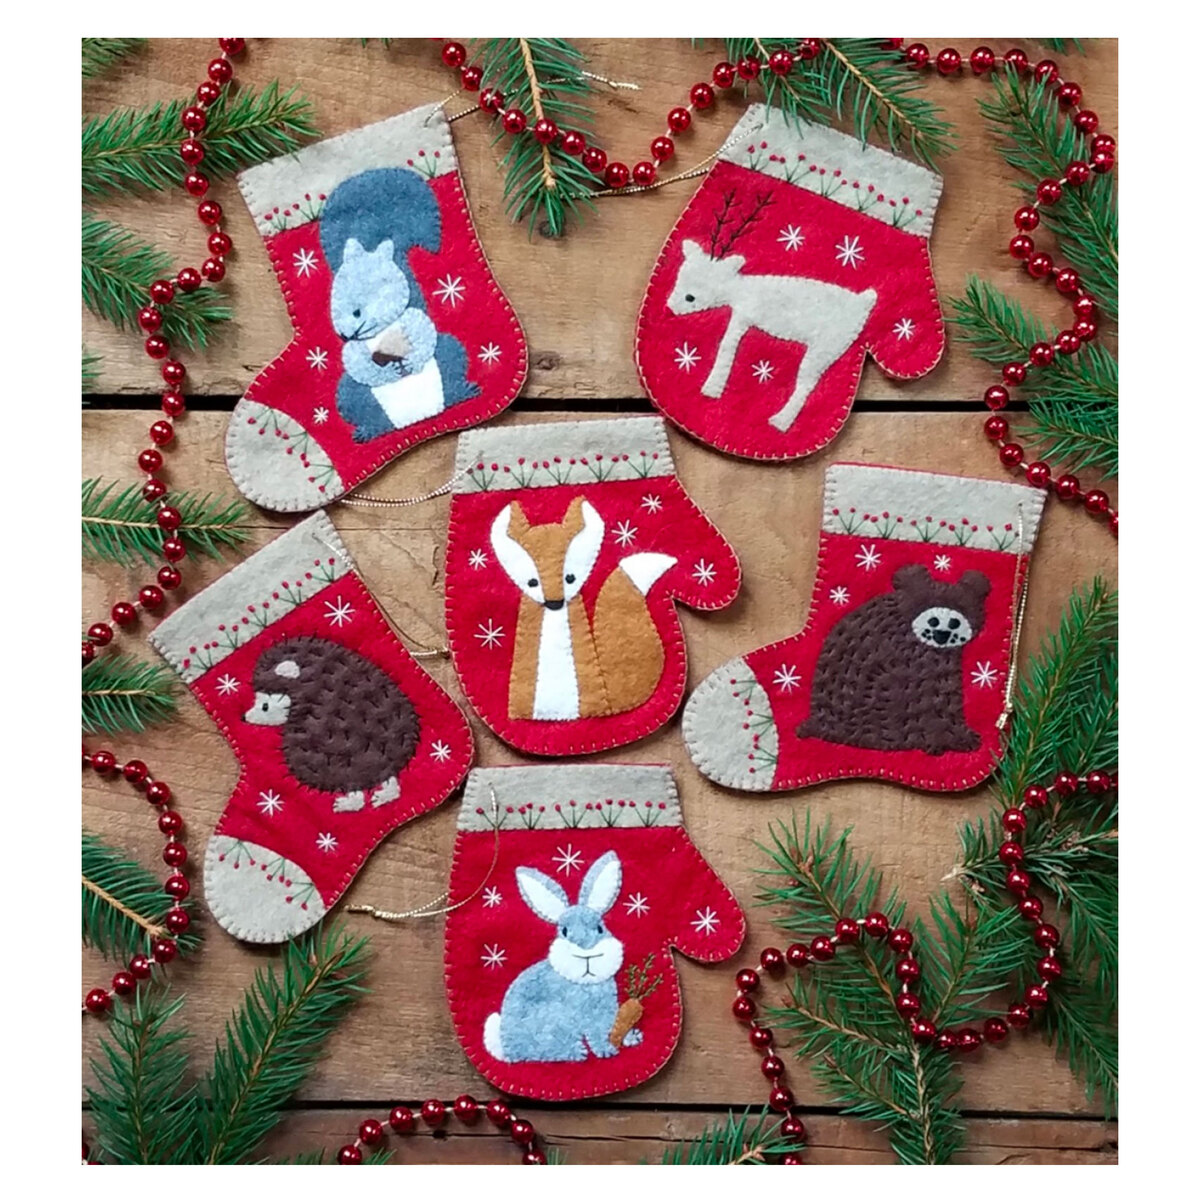 Everything Nice Stuffed Christmas Ornament Kit - In Wool Felt